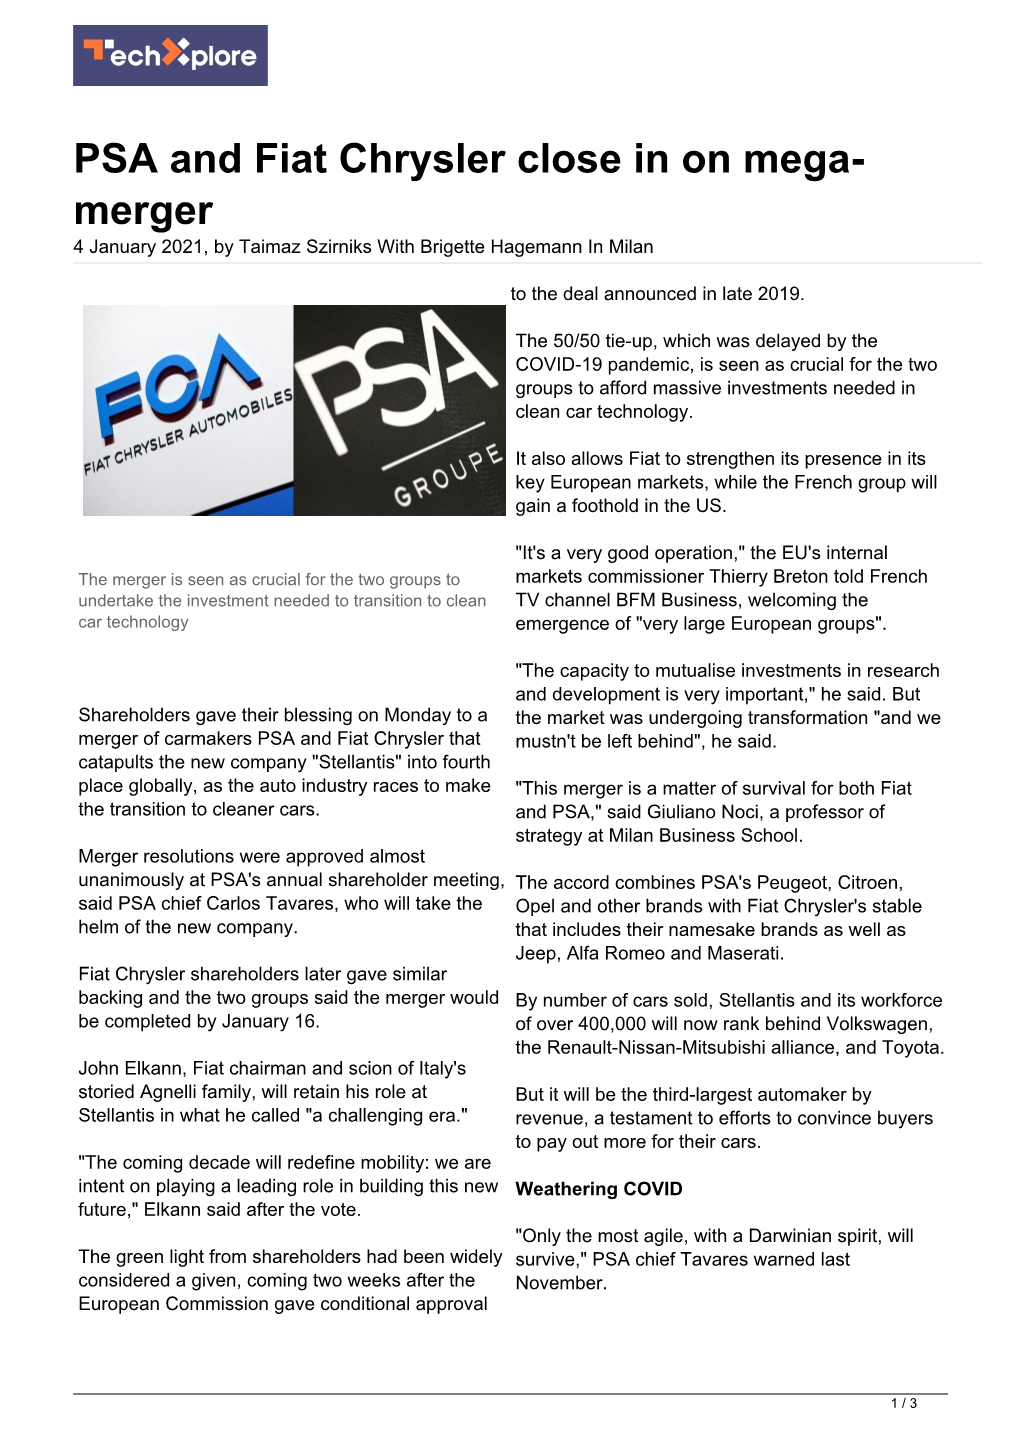 PSA and Fiat Chrysler Close in on Mega-Merger